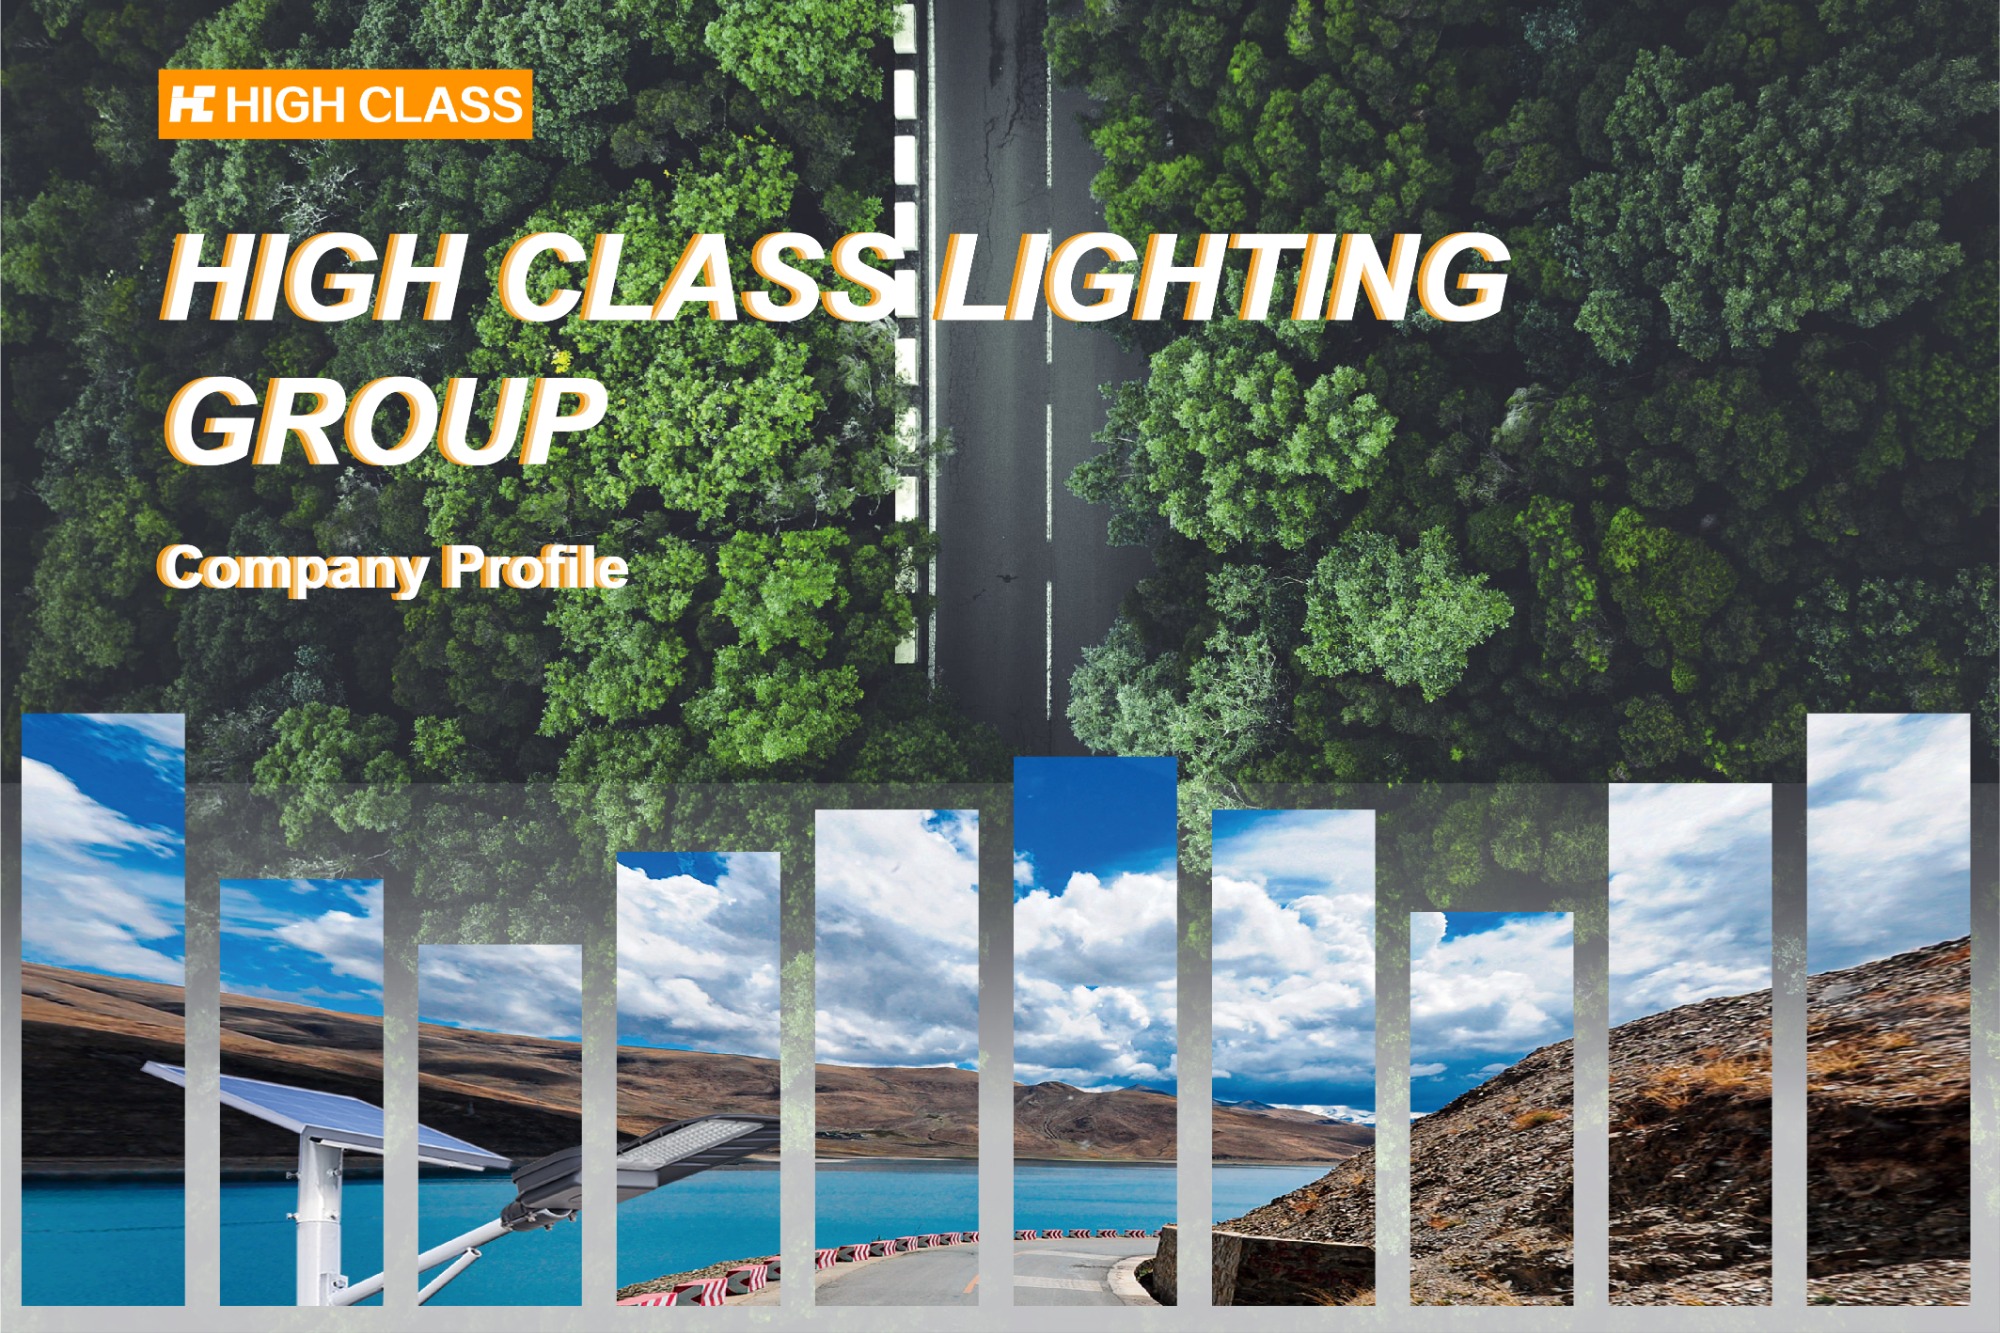 HIGH CLASS Lighting Group Profile